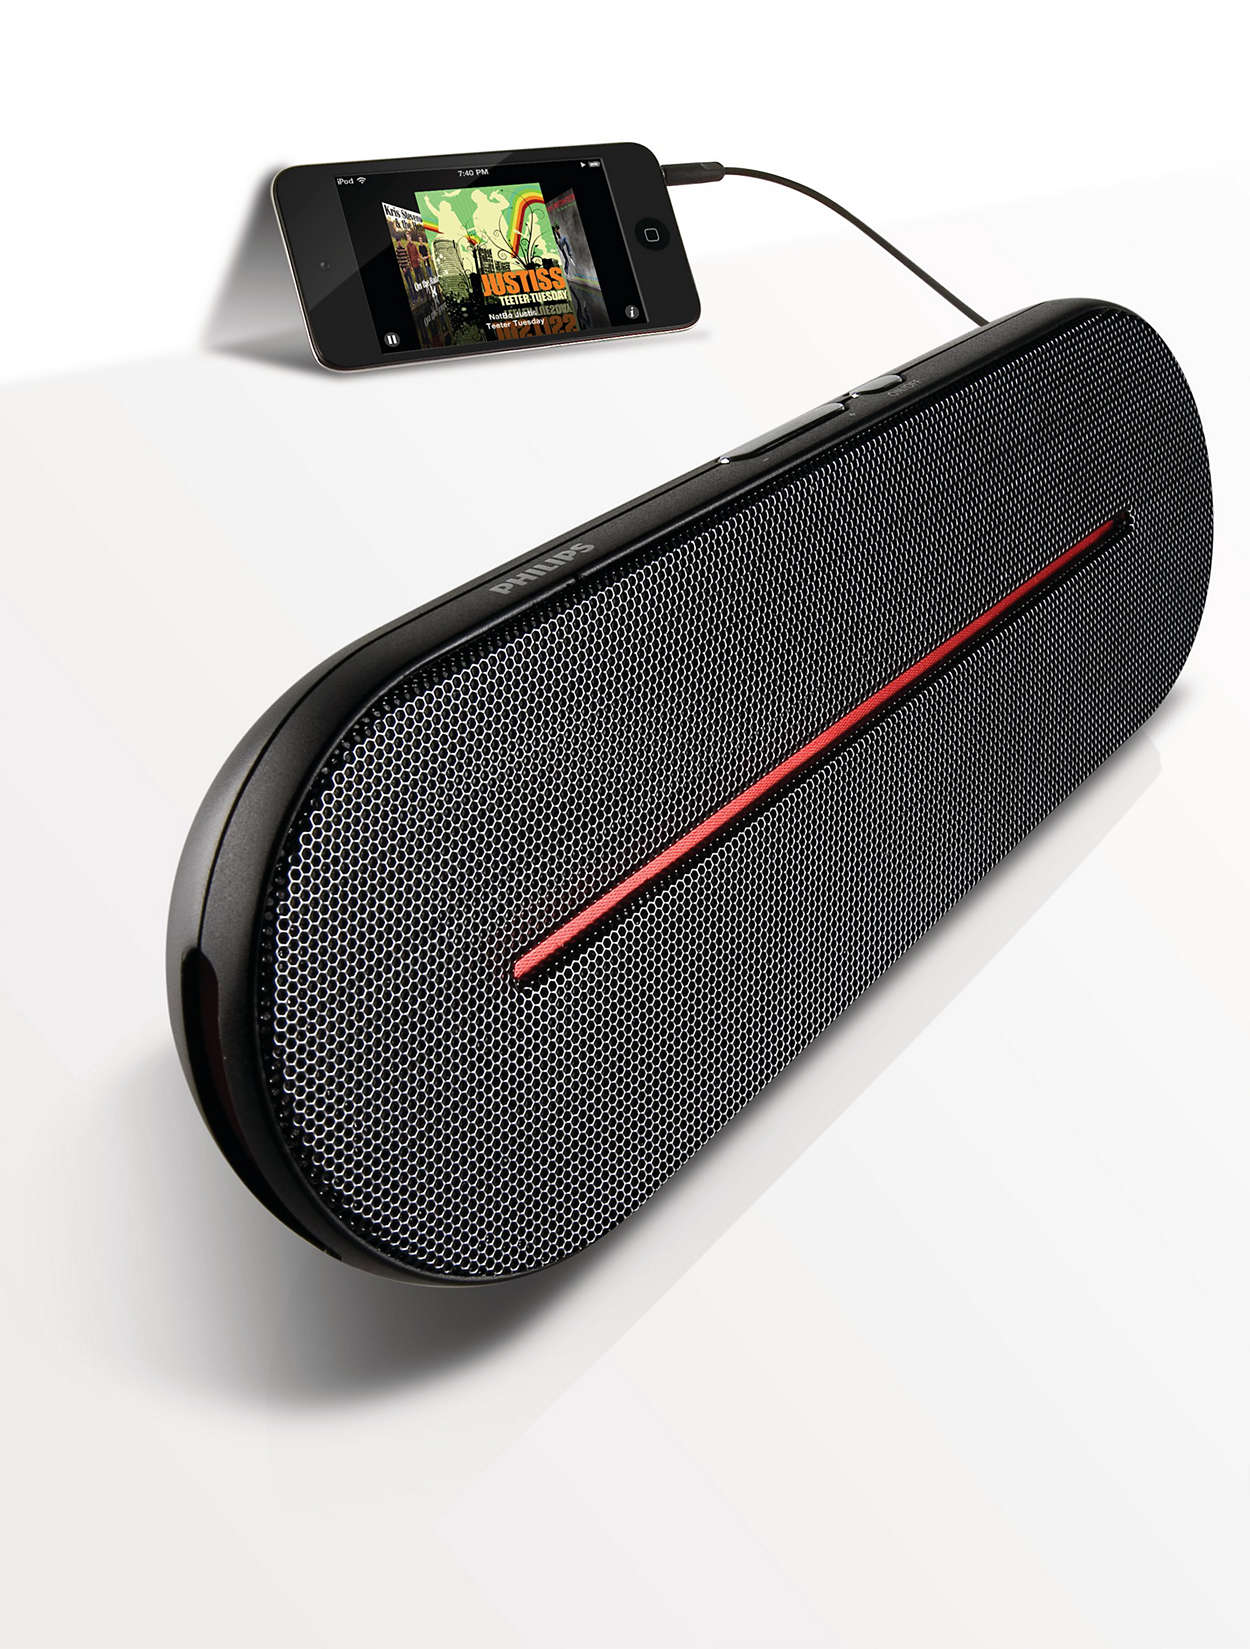 Portable, high-quality stereo sound